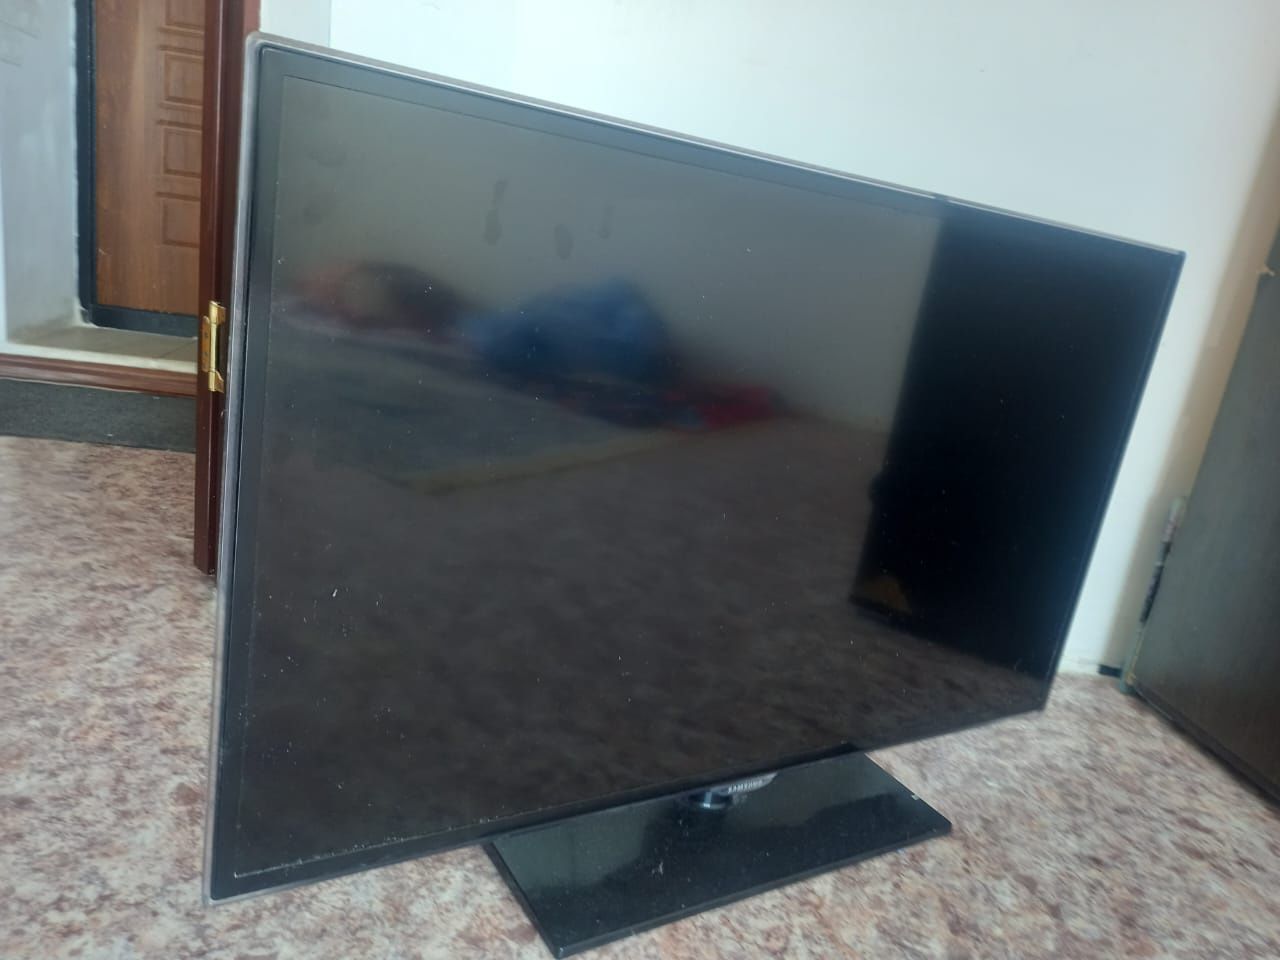 ЖК телевизор Самсунг 40 дюймов 100 герц FHD